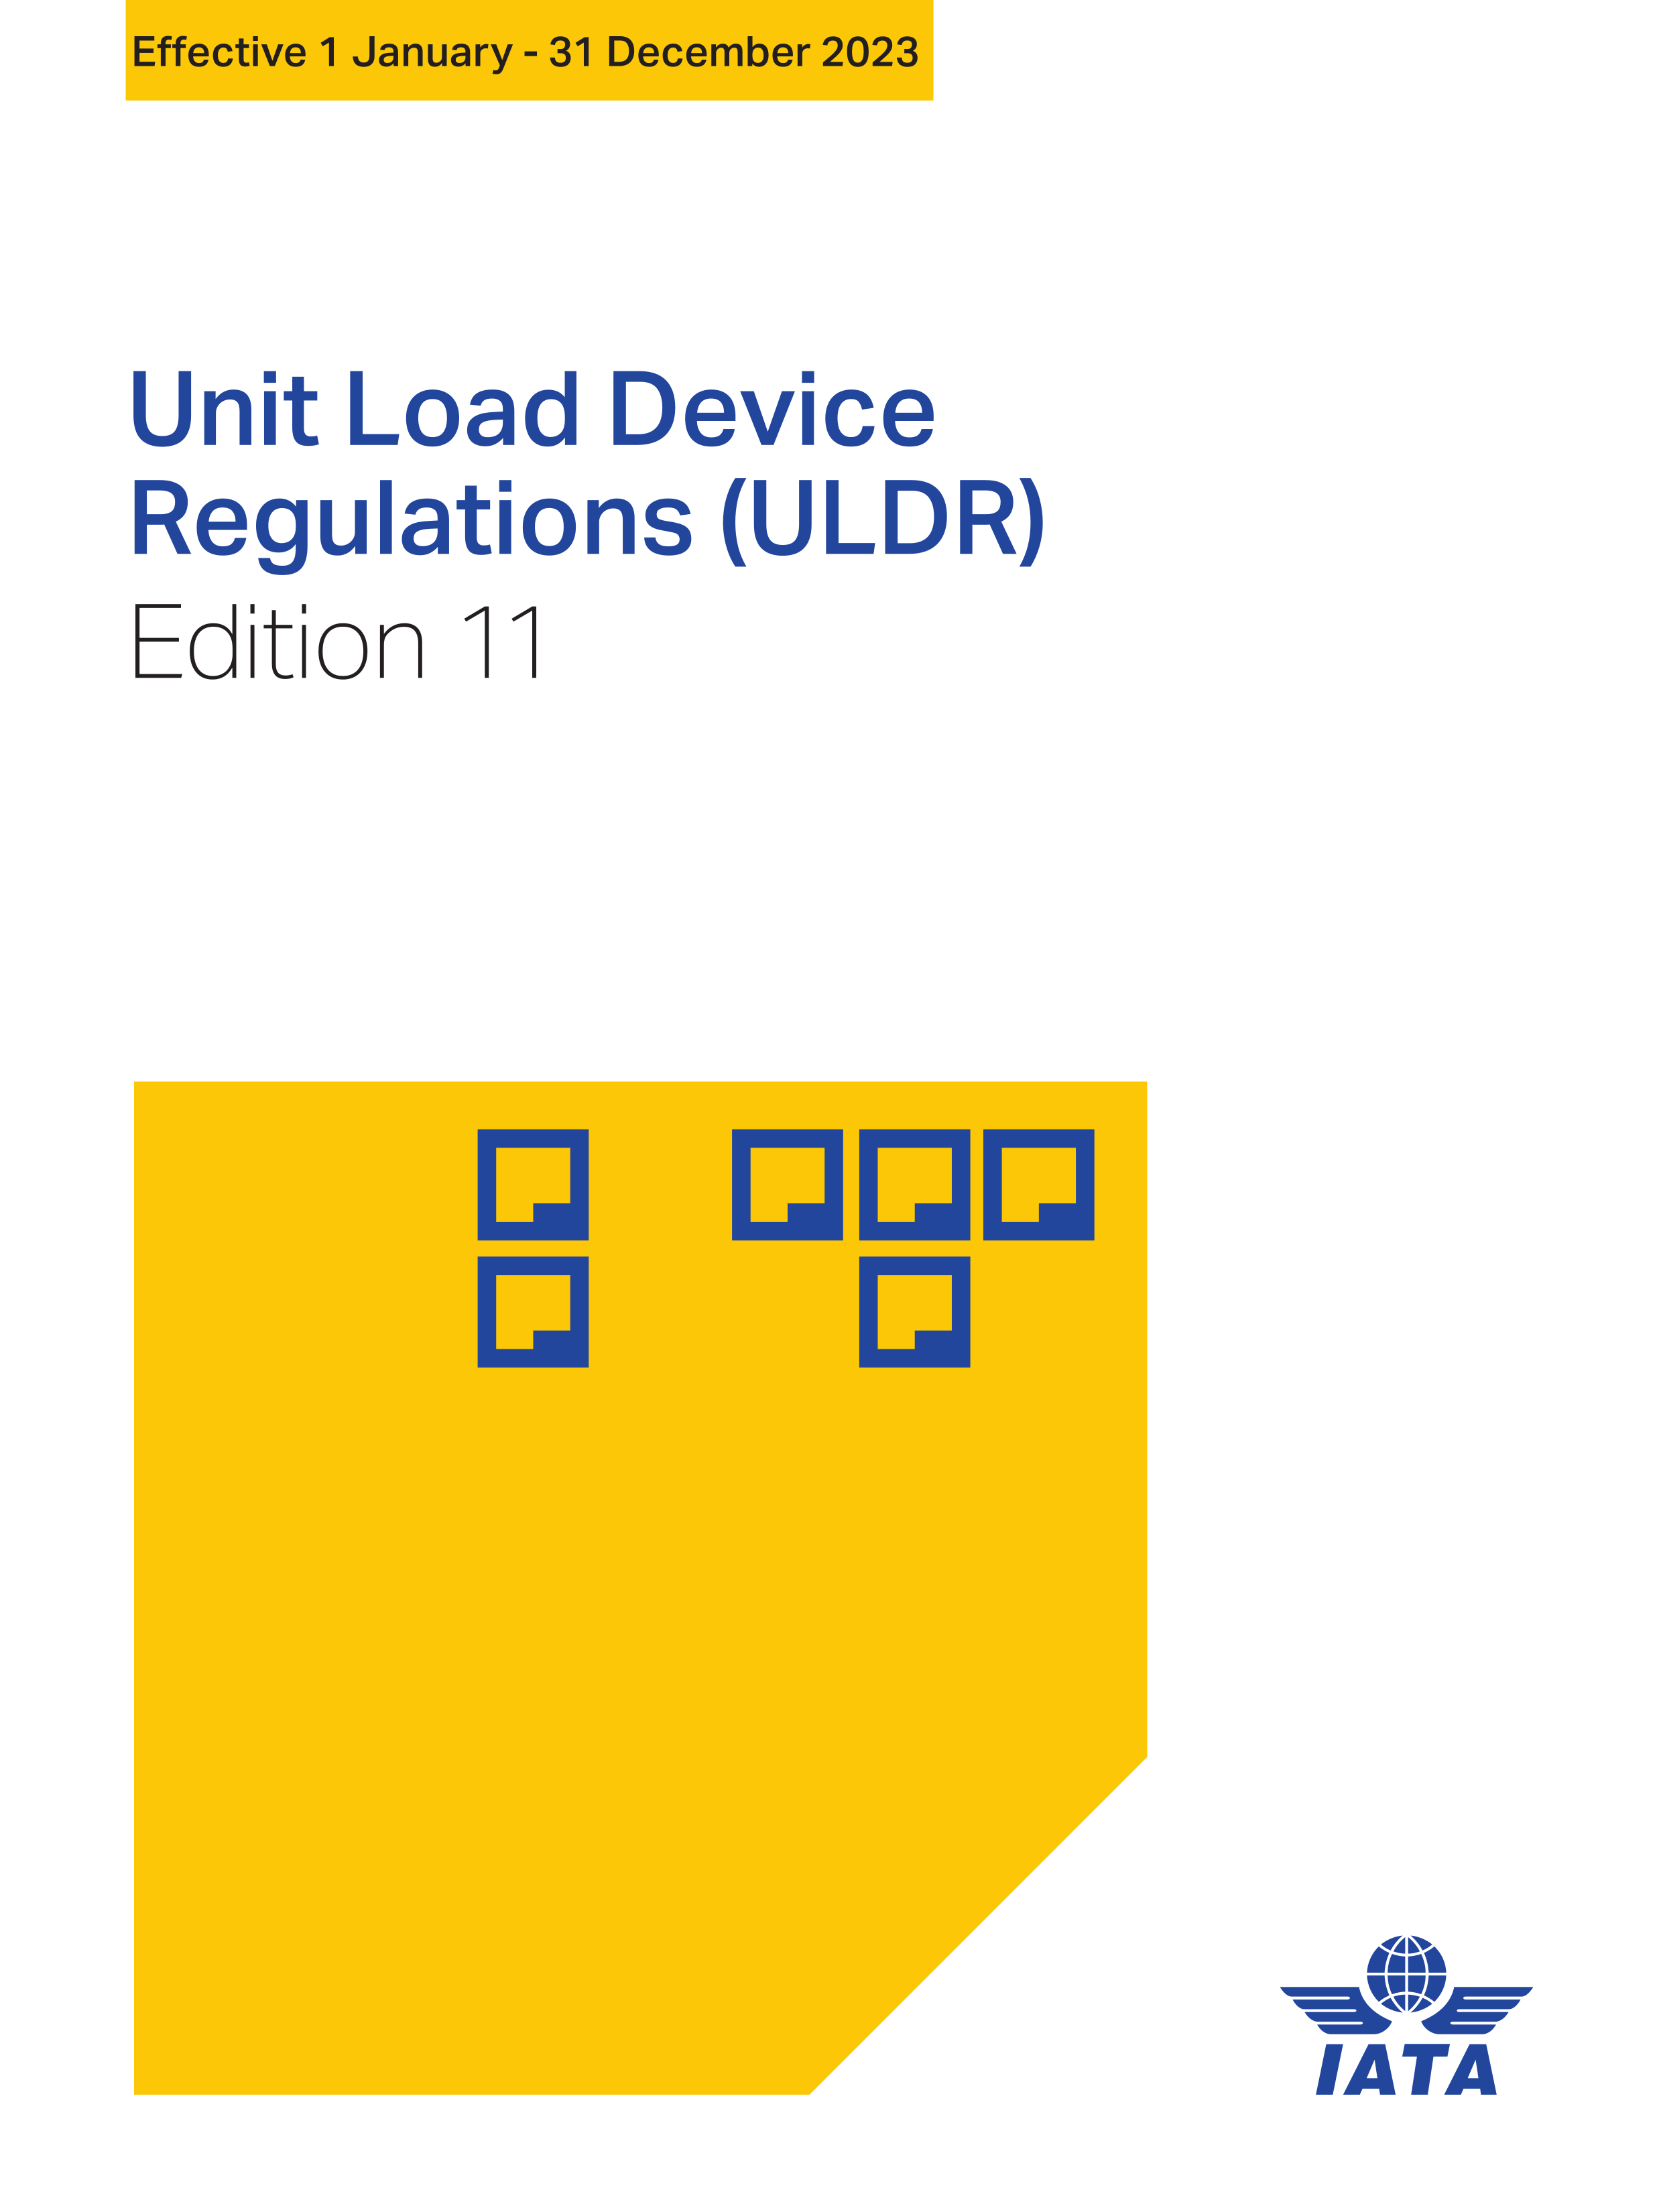 2023 ULD Regulations (ULDR)